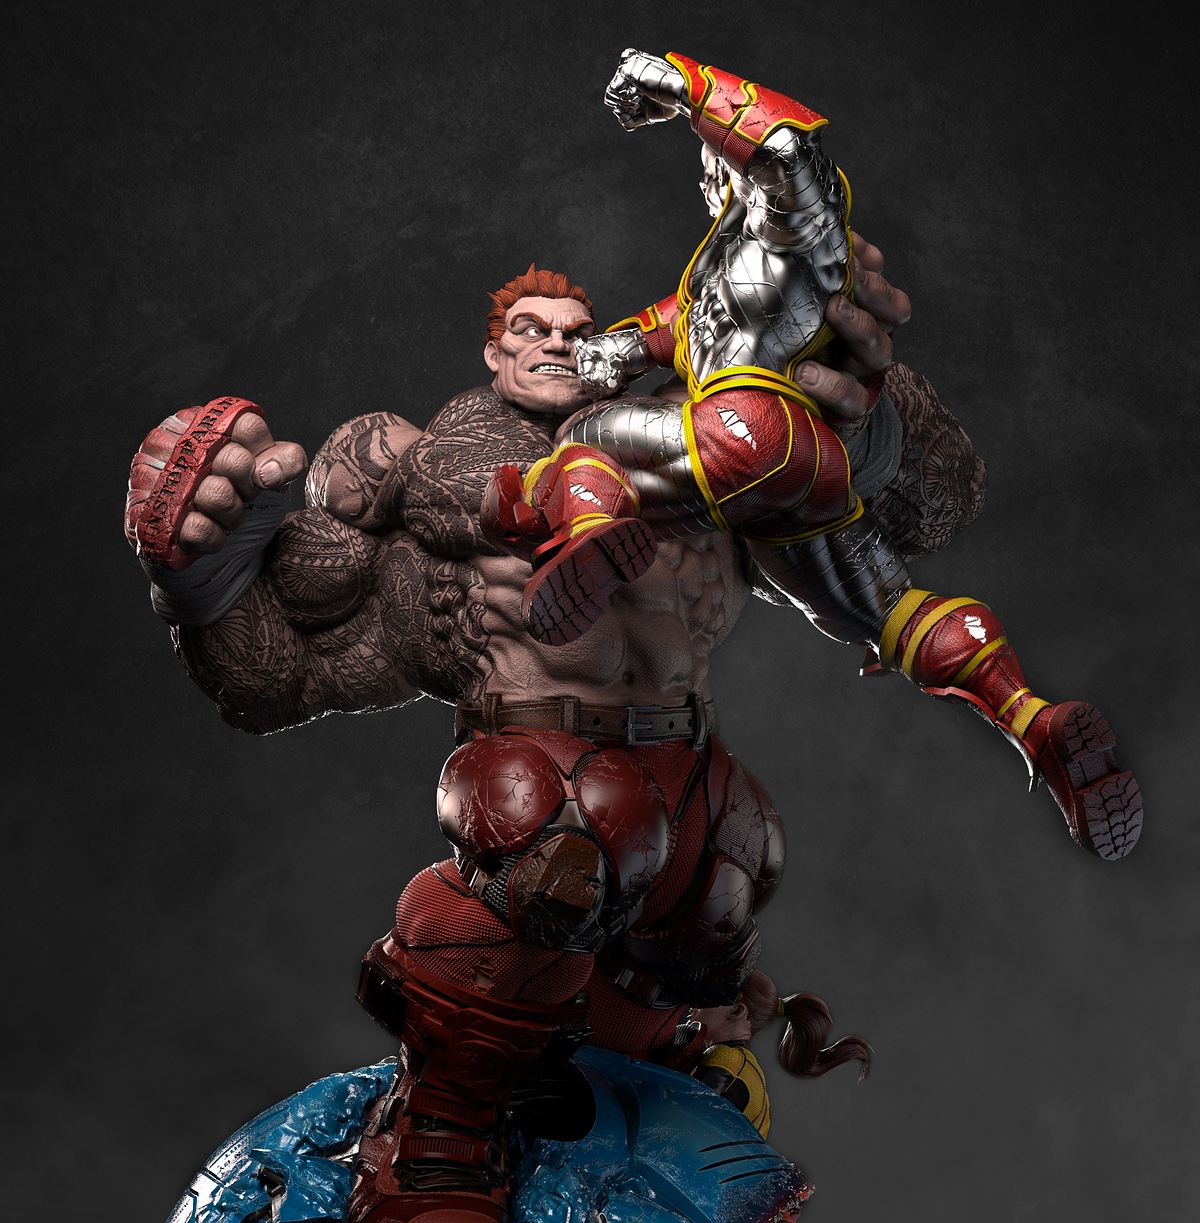 juggernaut vs colossus - image19